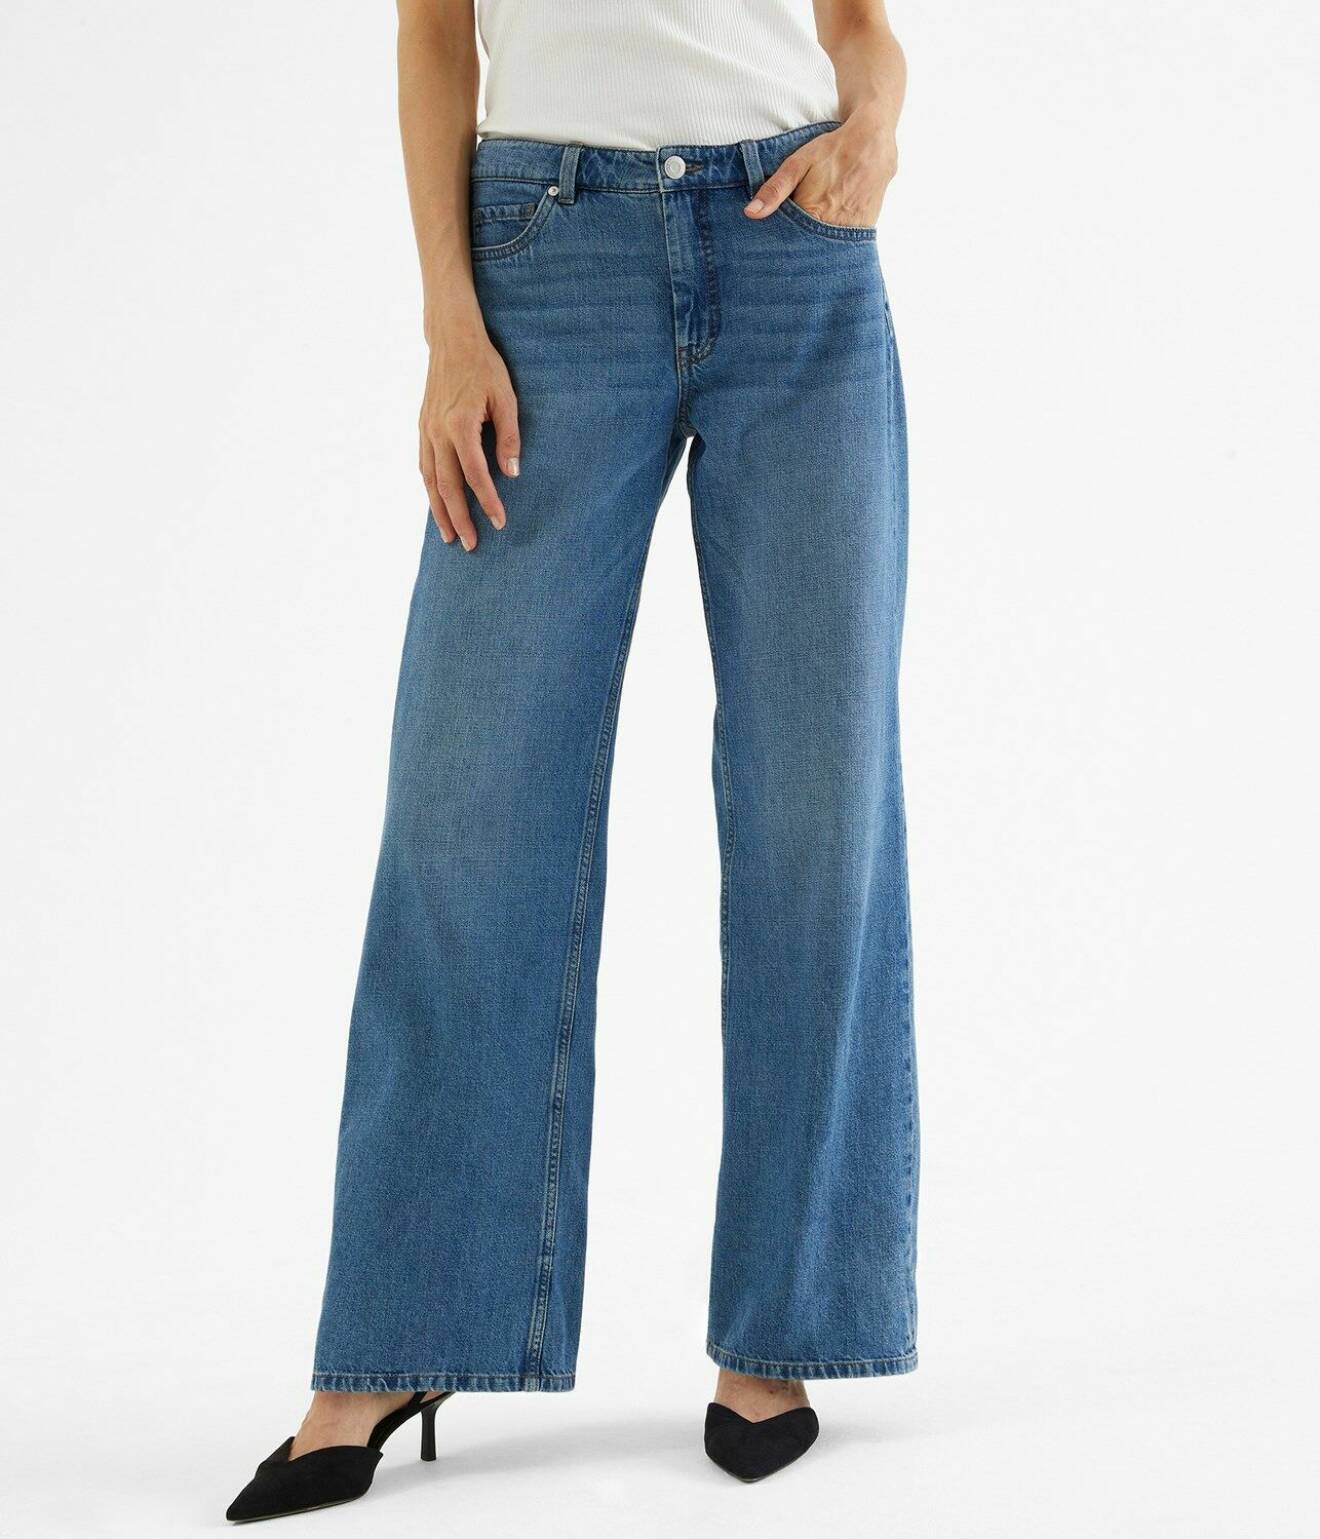 jeans passform utan stretch